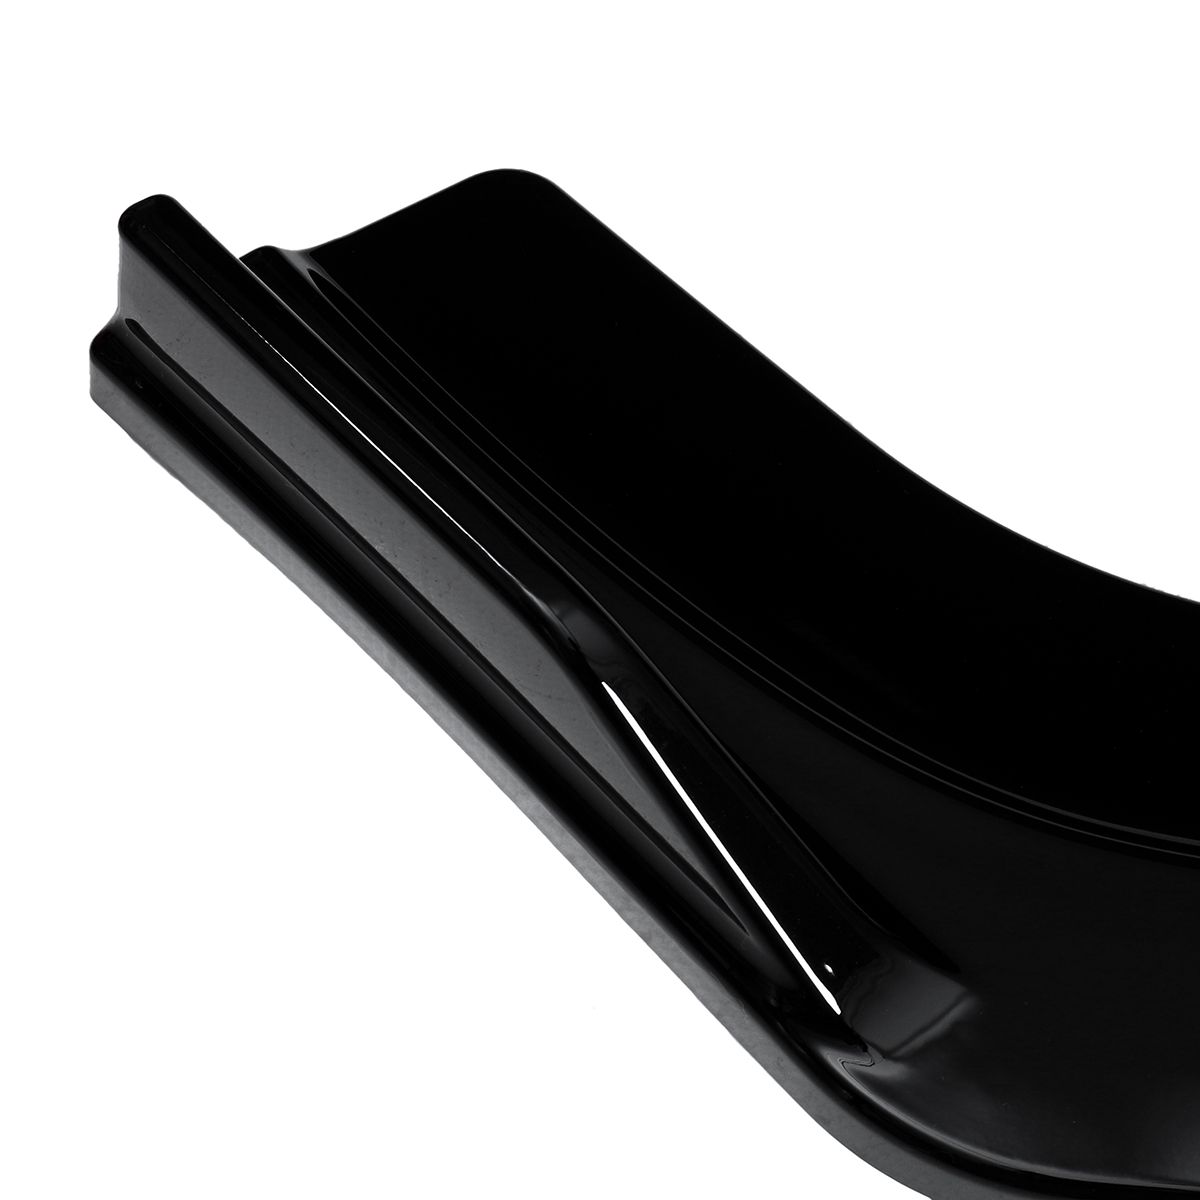 Glossy-Black-Three-Stops-Front-Lip-Bumper-Splitter-Protector-For-NISSAN-ALTIMA-4-Door-Sedan-20132018-1564425